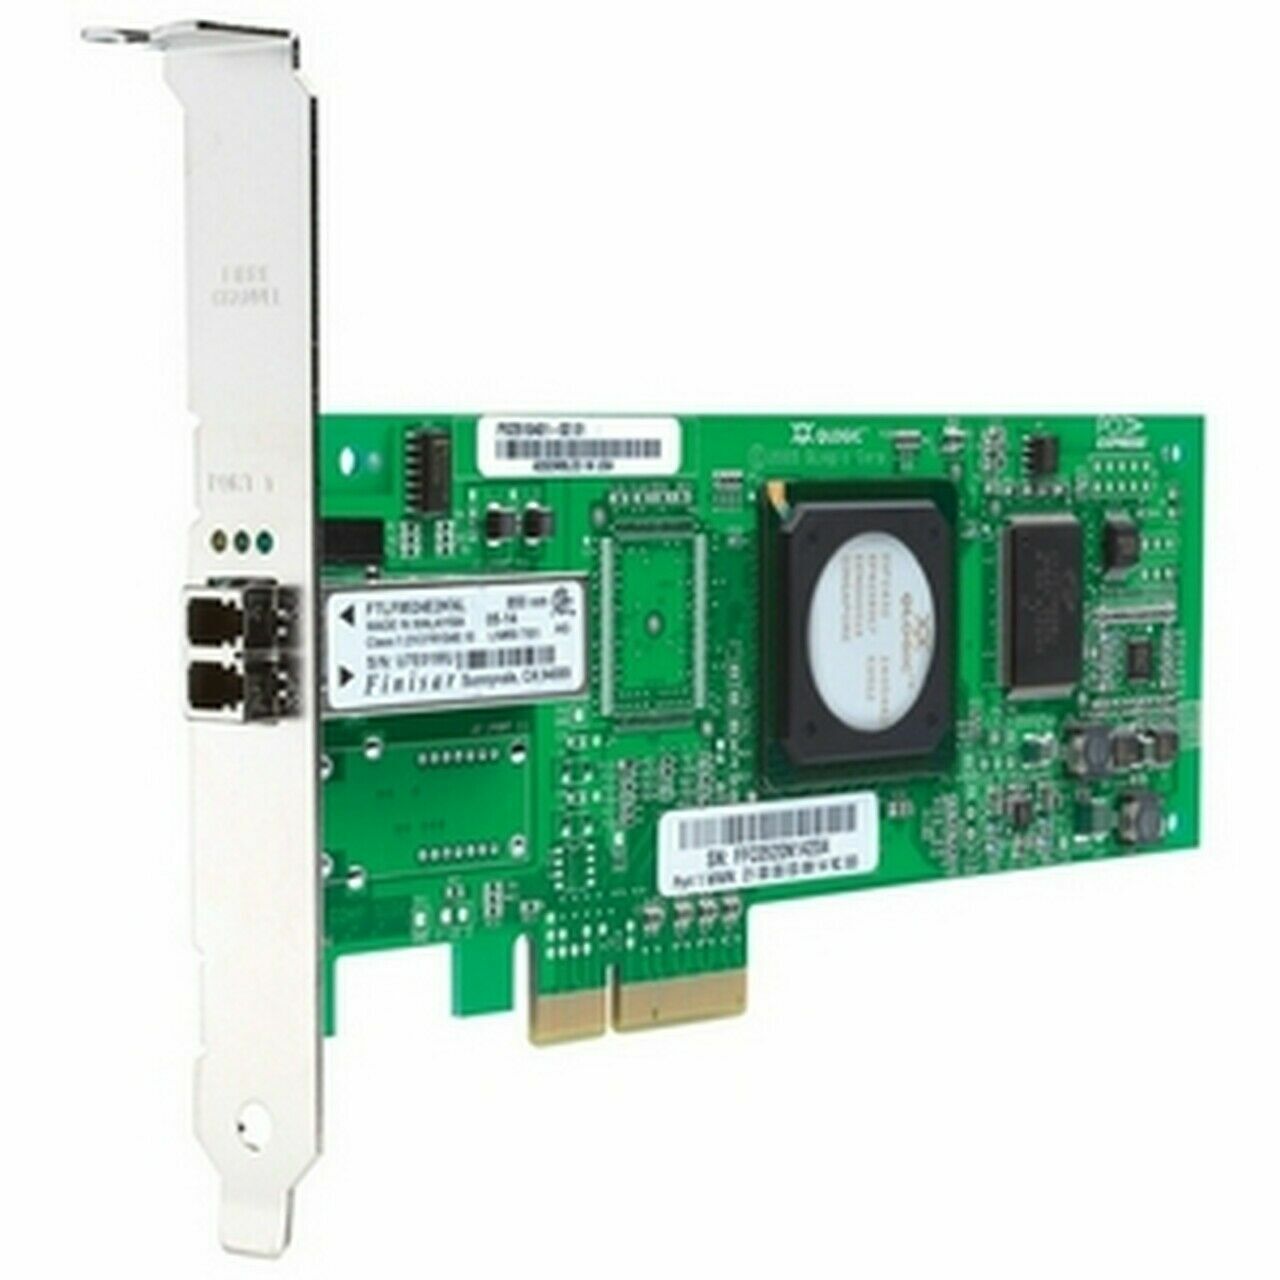 HP FC2143 4GB PCI-X 2.0 HBA AD167A  NEW  GENUINE        